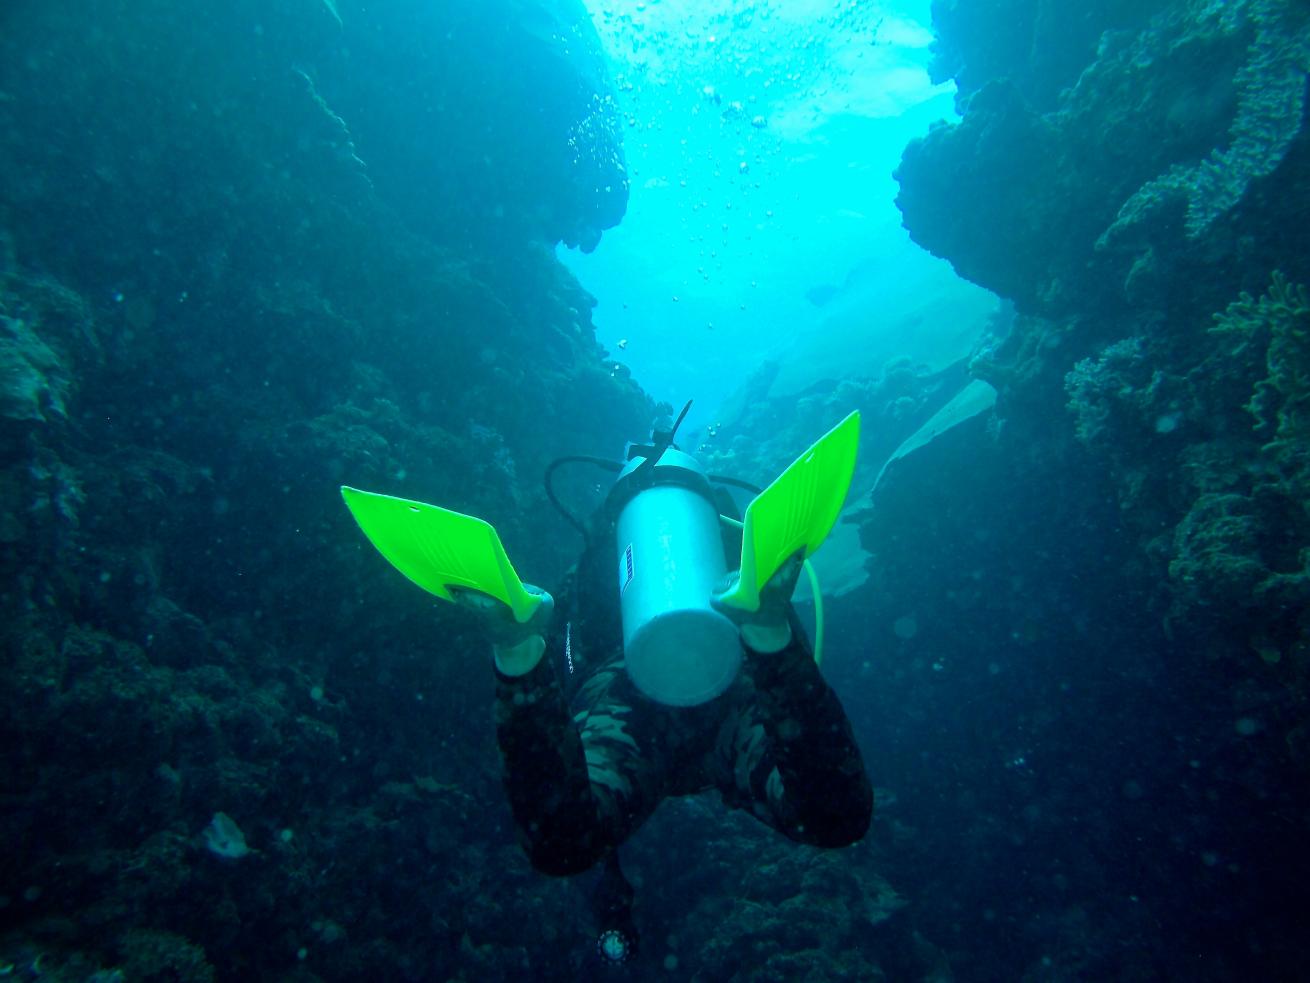 A diver explores underwater in Fiji